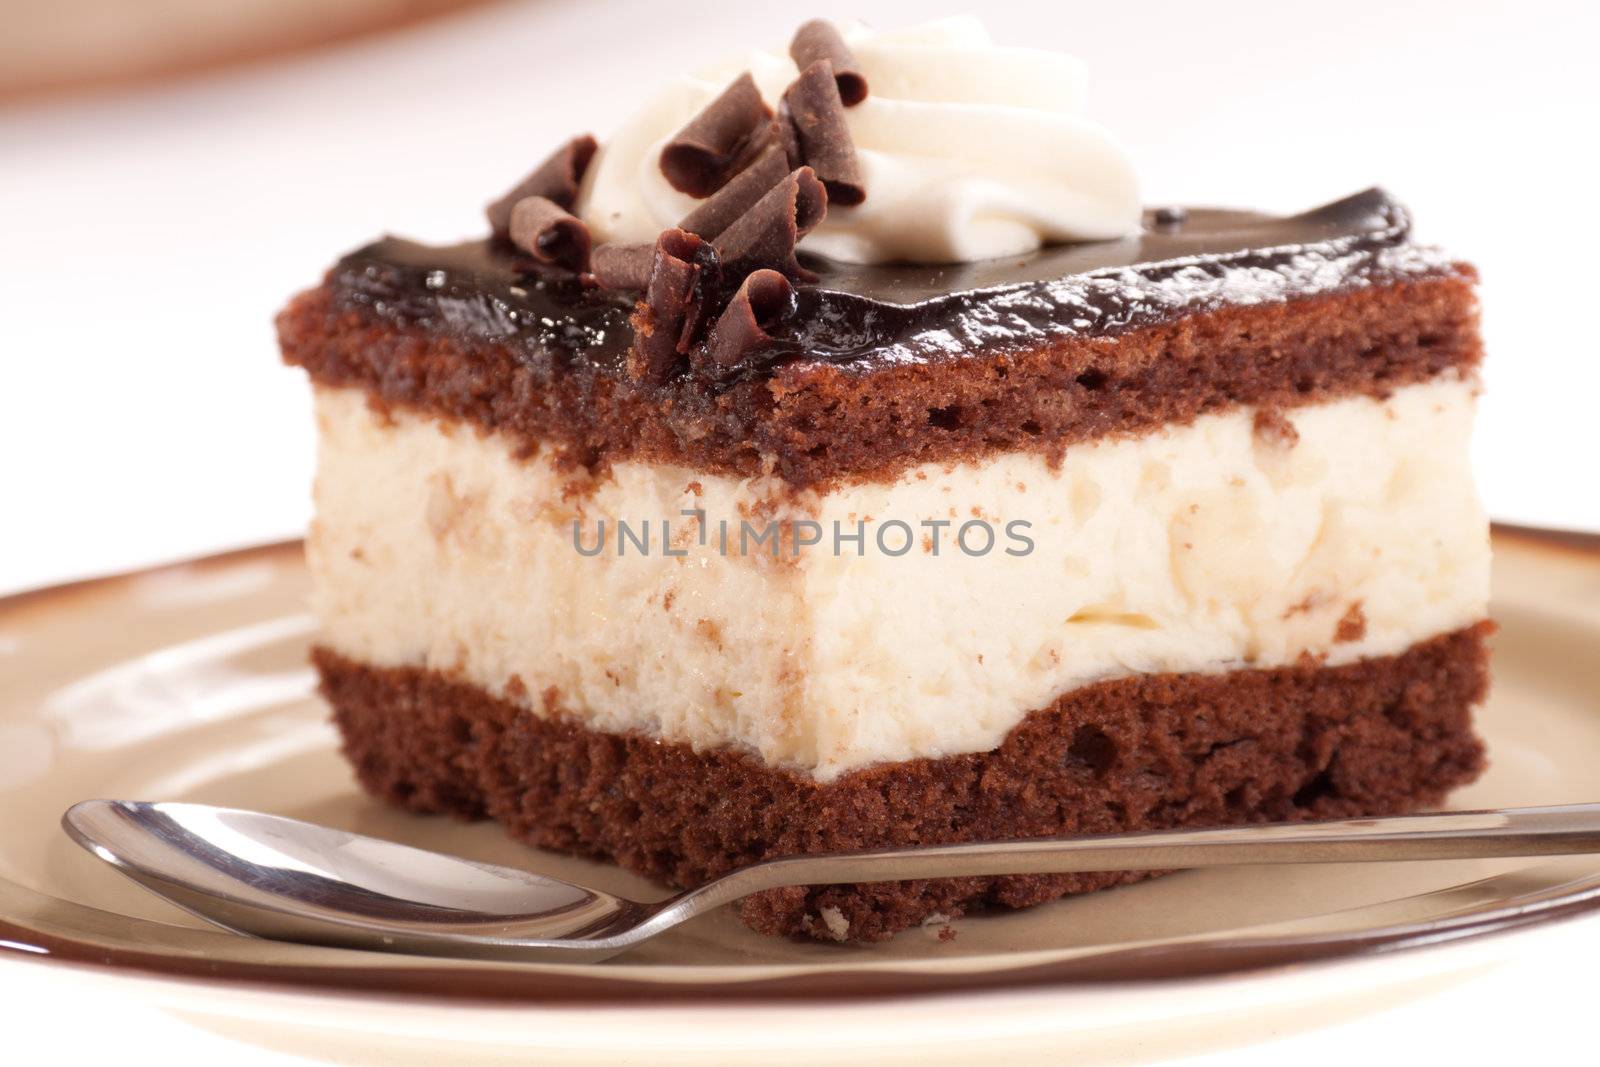 Piece of chocolate cream cake, on a plate